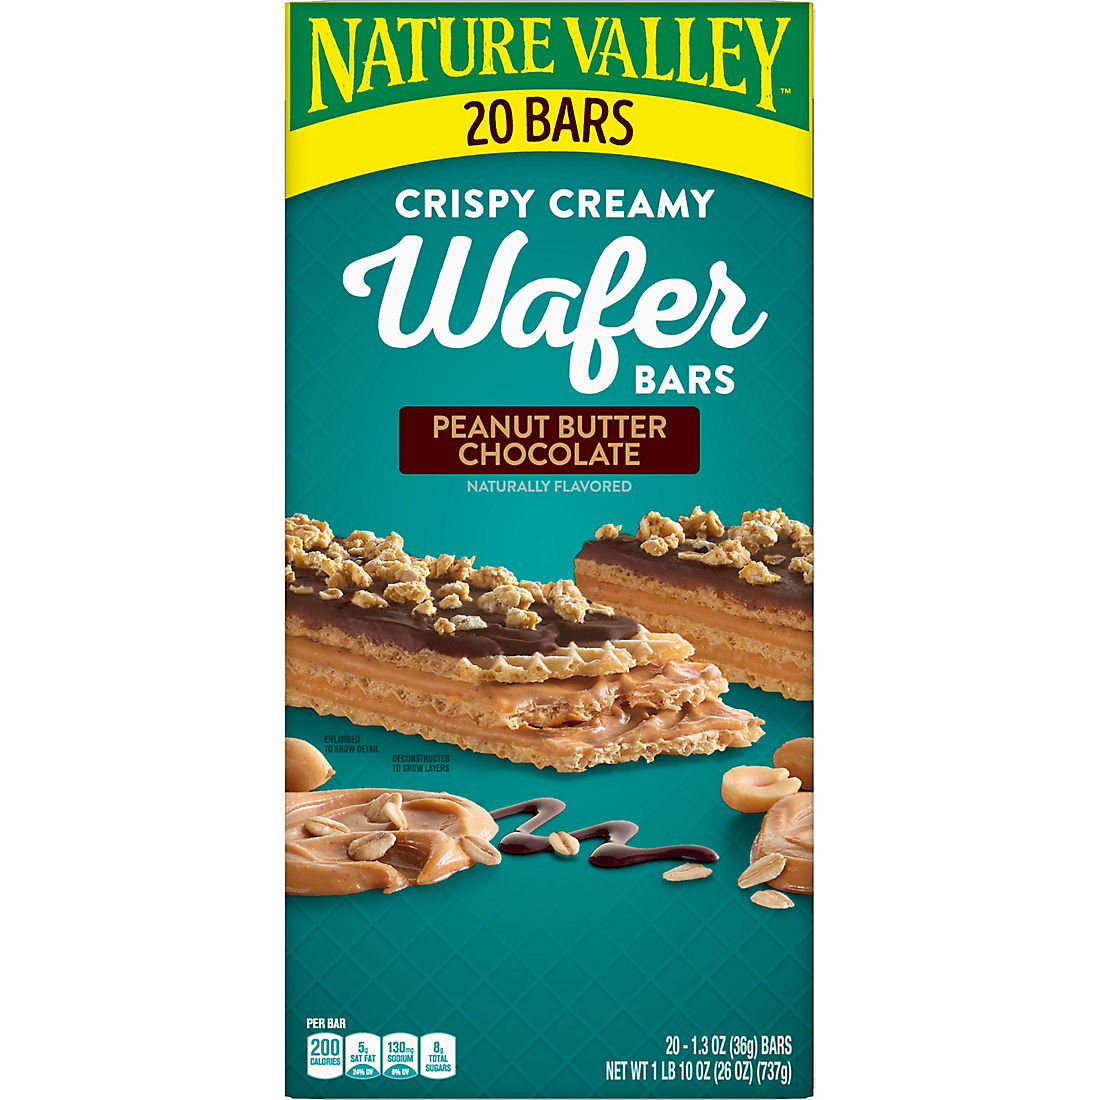 Nature Valley Peanut Butter Crispy Creamy Wafer Bars